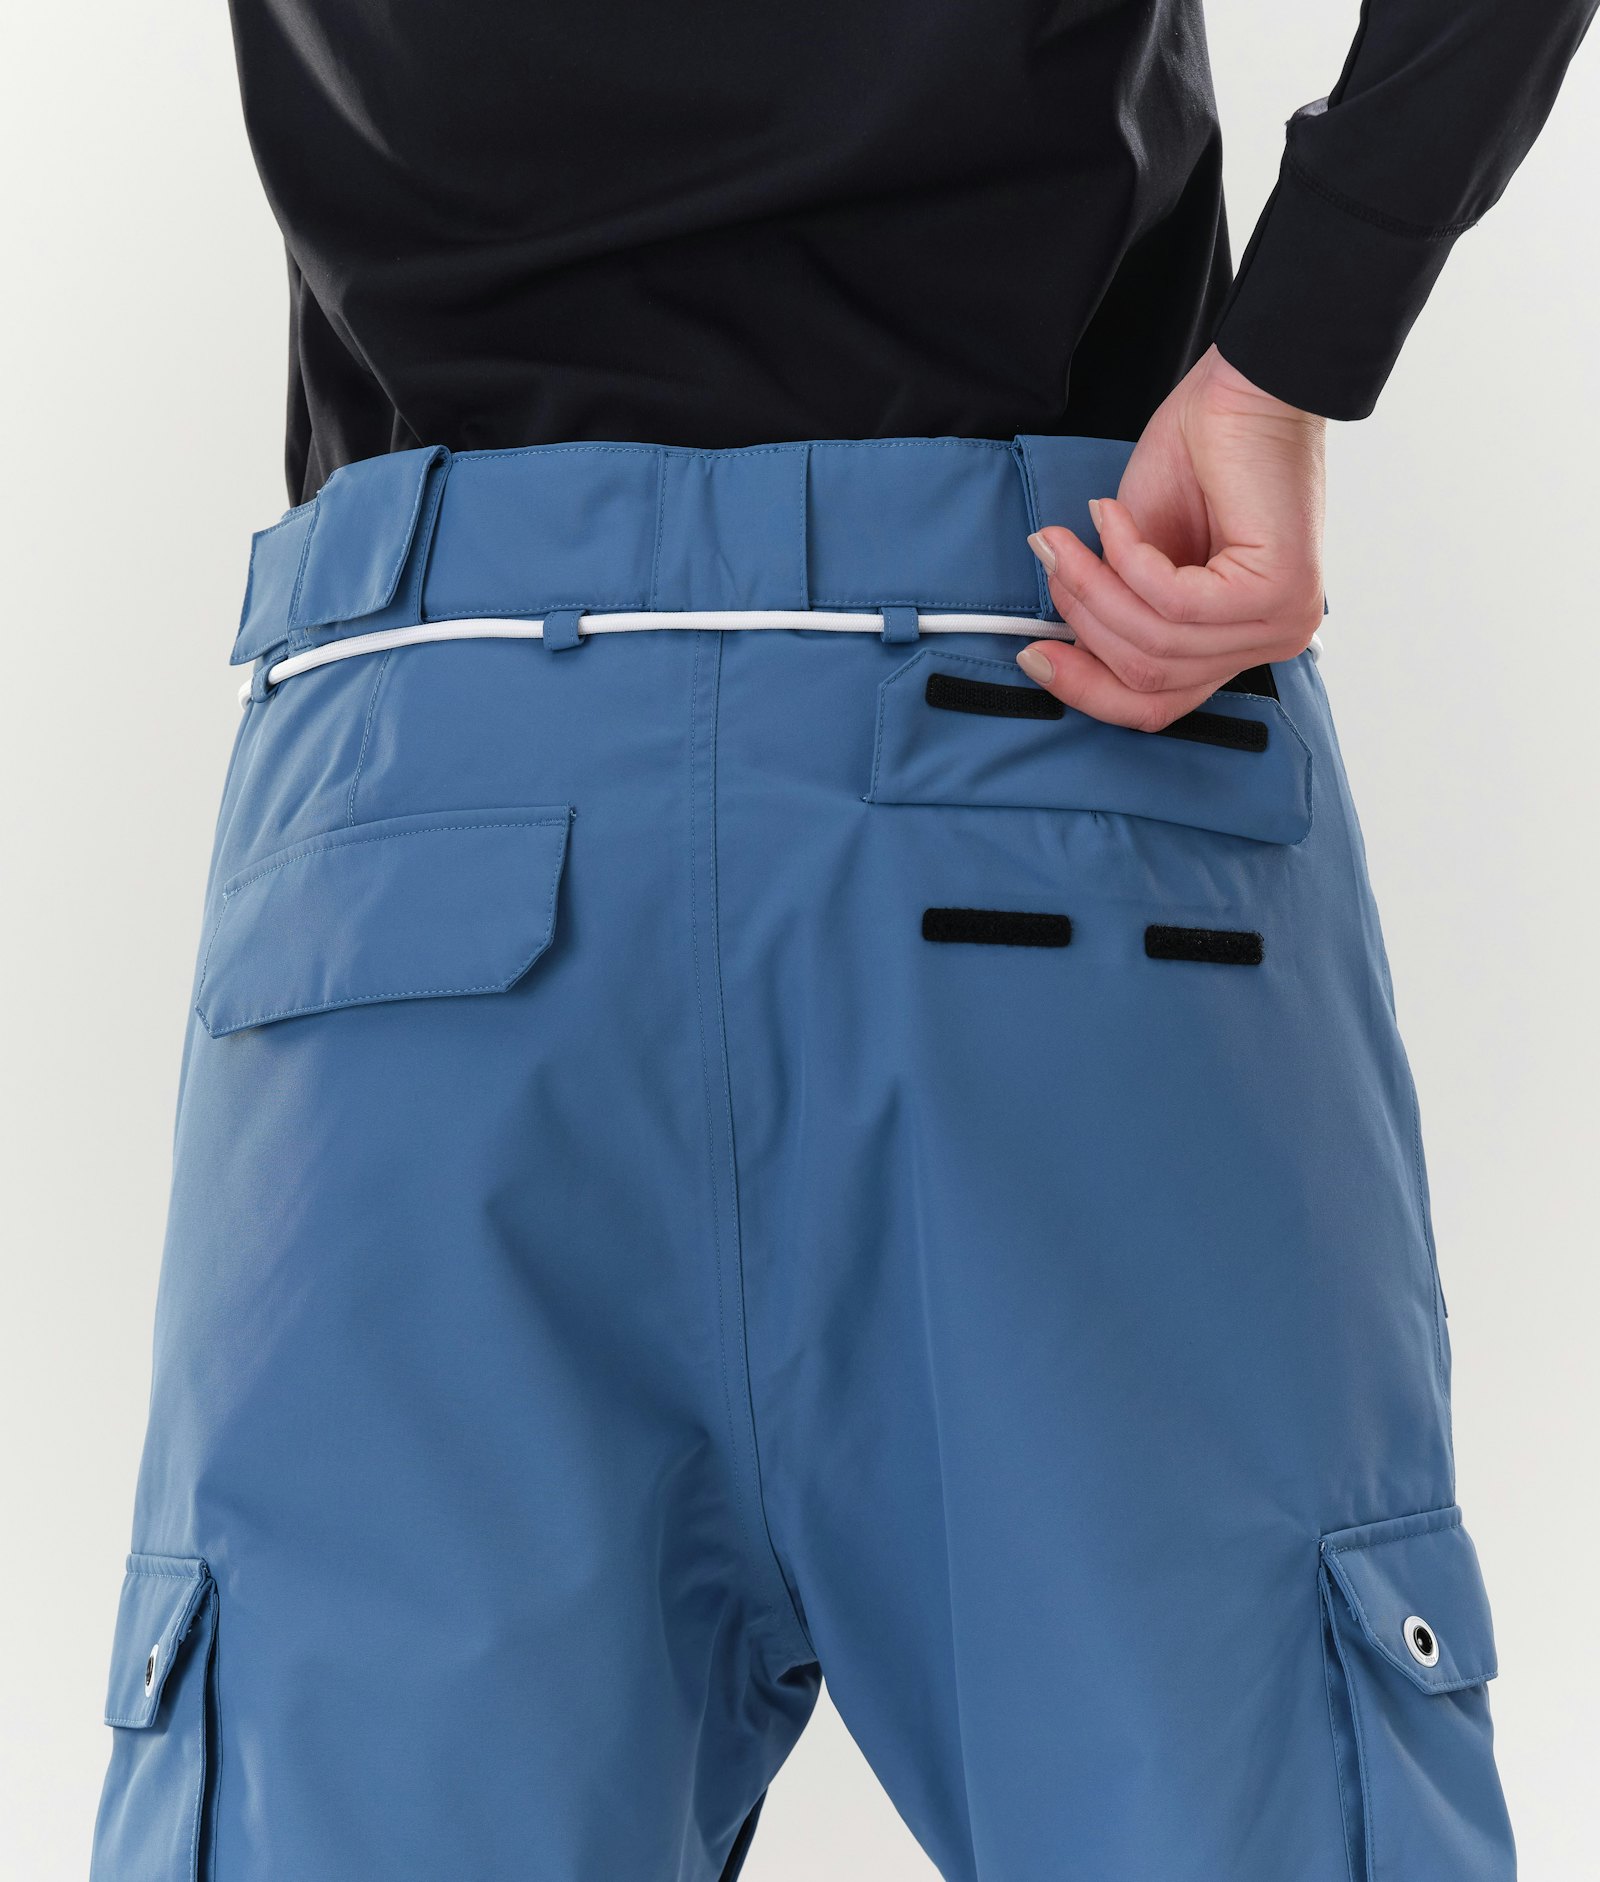 Iconic W 2020 Pantalon de Ski Femme Blue Steel